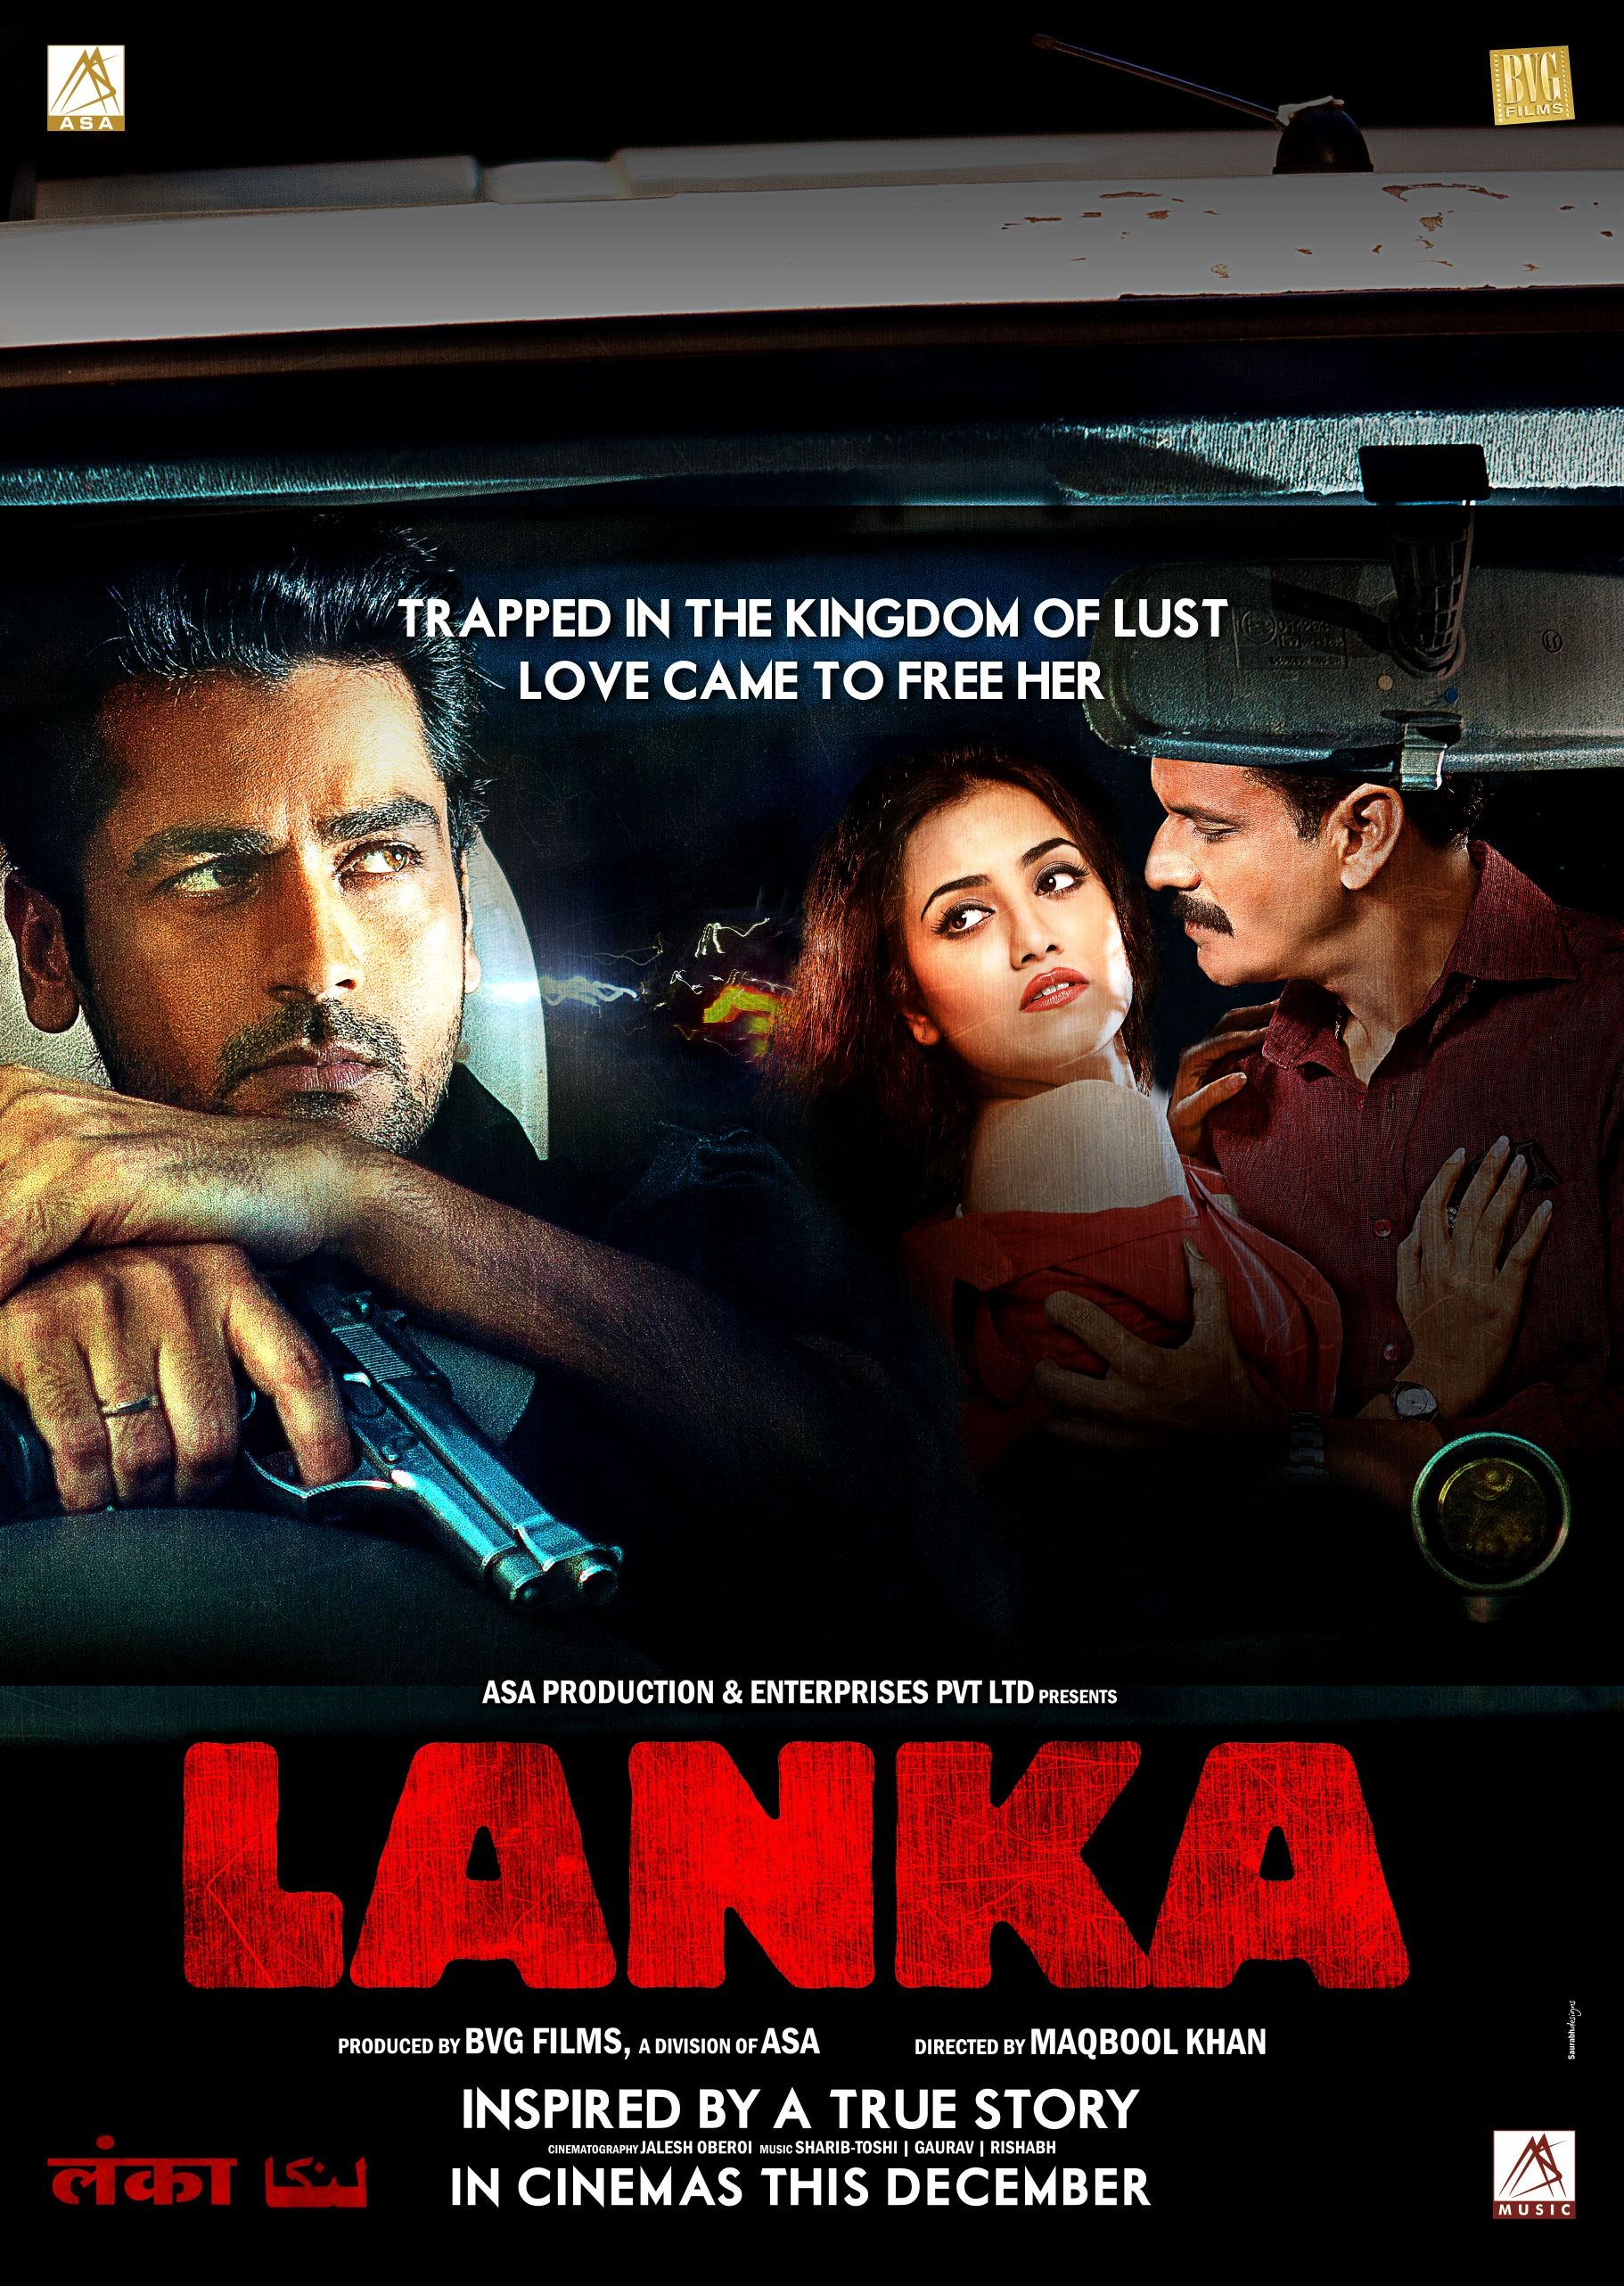 Mega Sized Movie Poster Image for Lanka (#4 of 4)